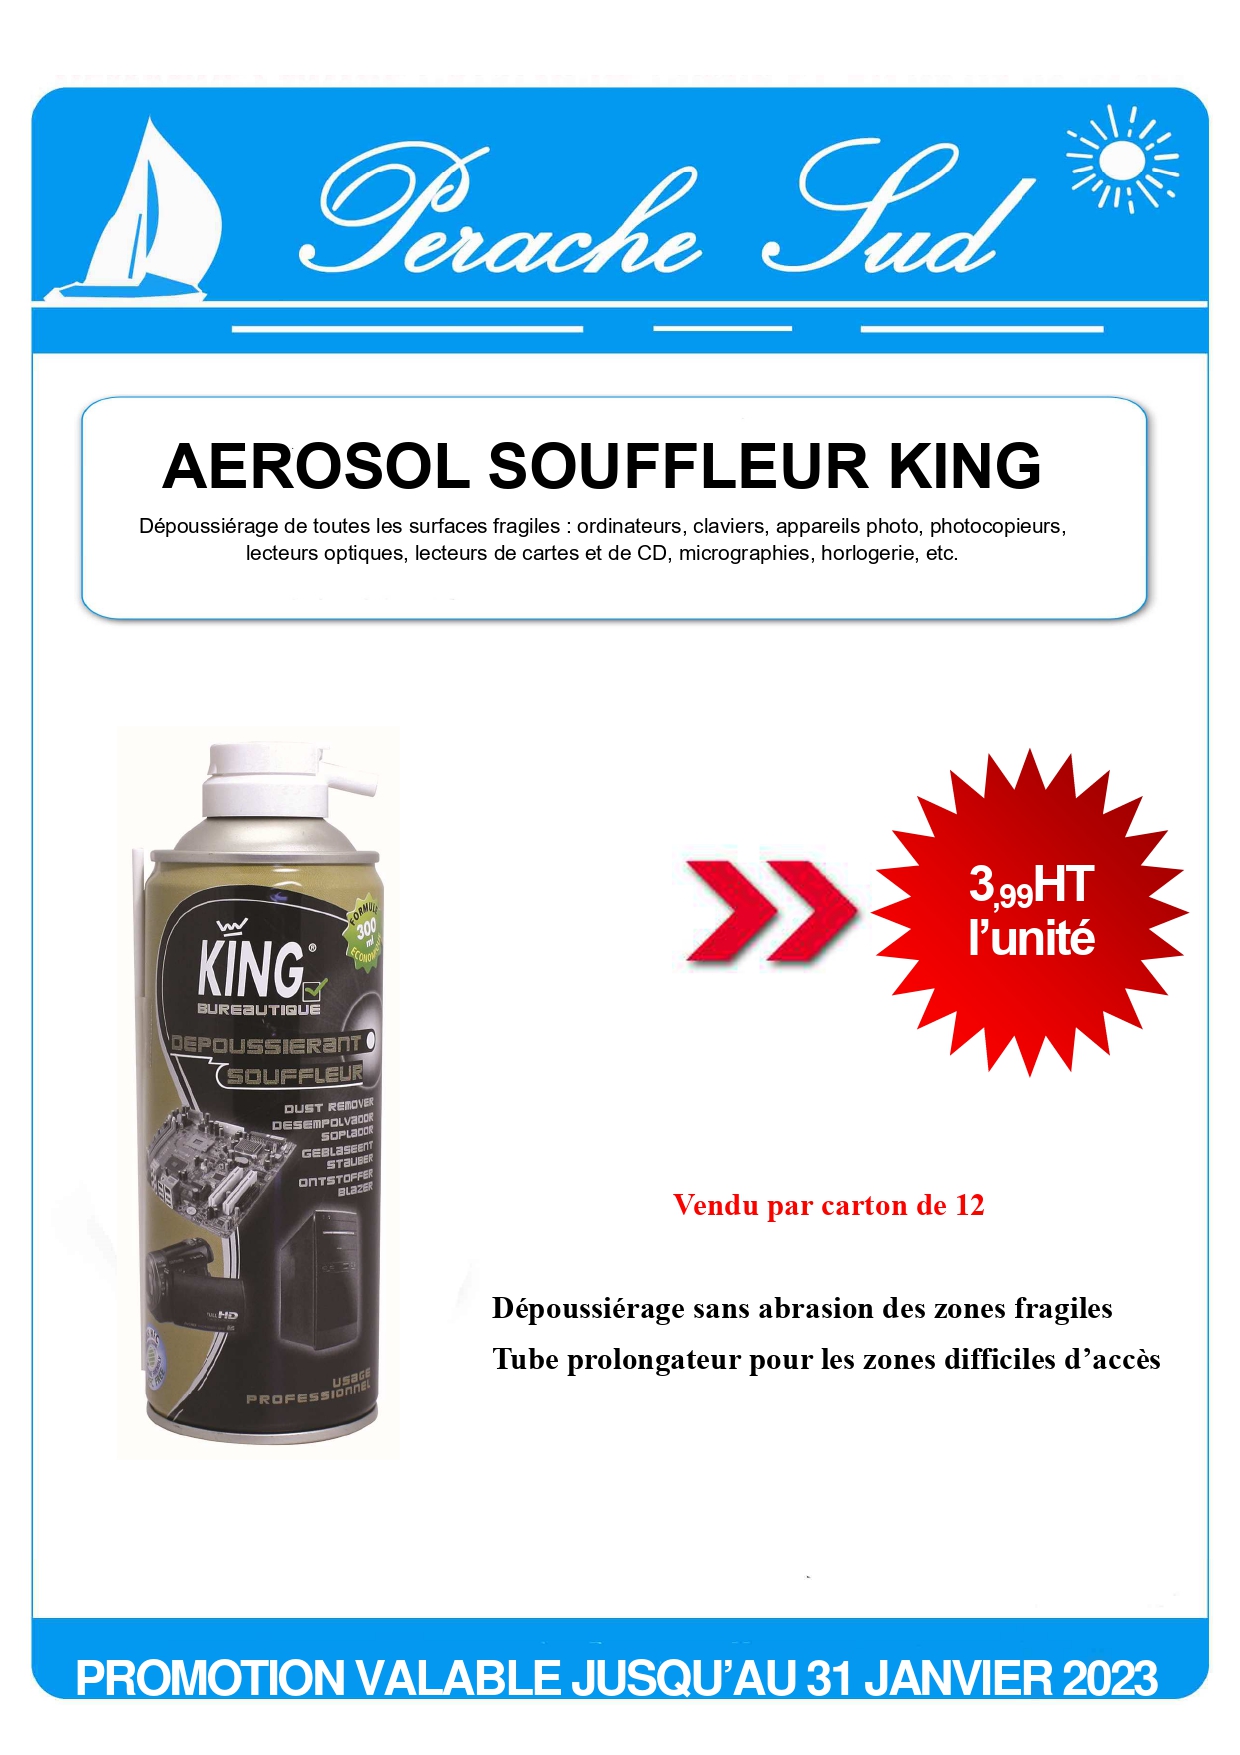 Promotion Arosol souffleur king